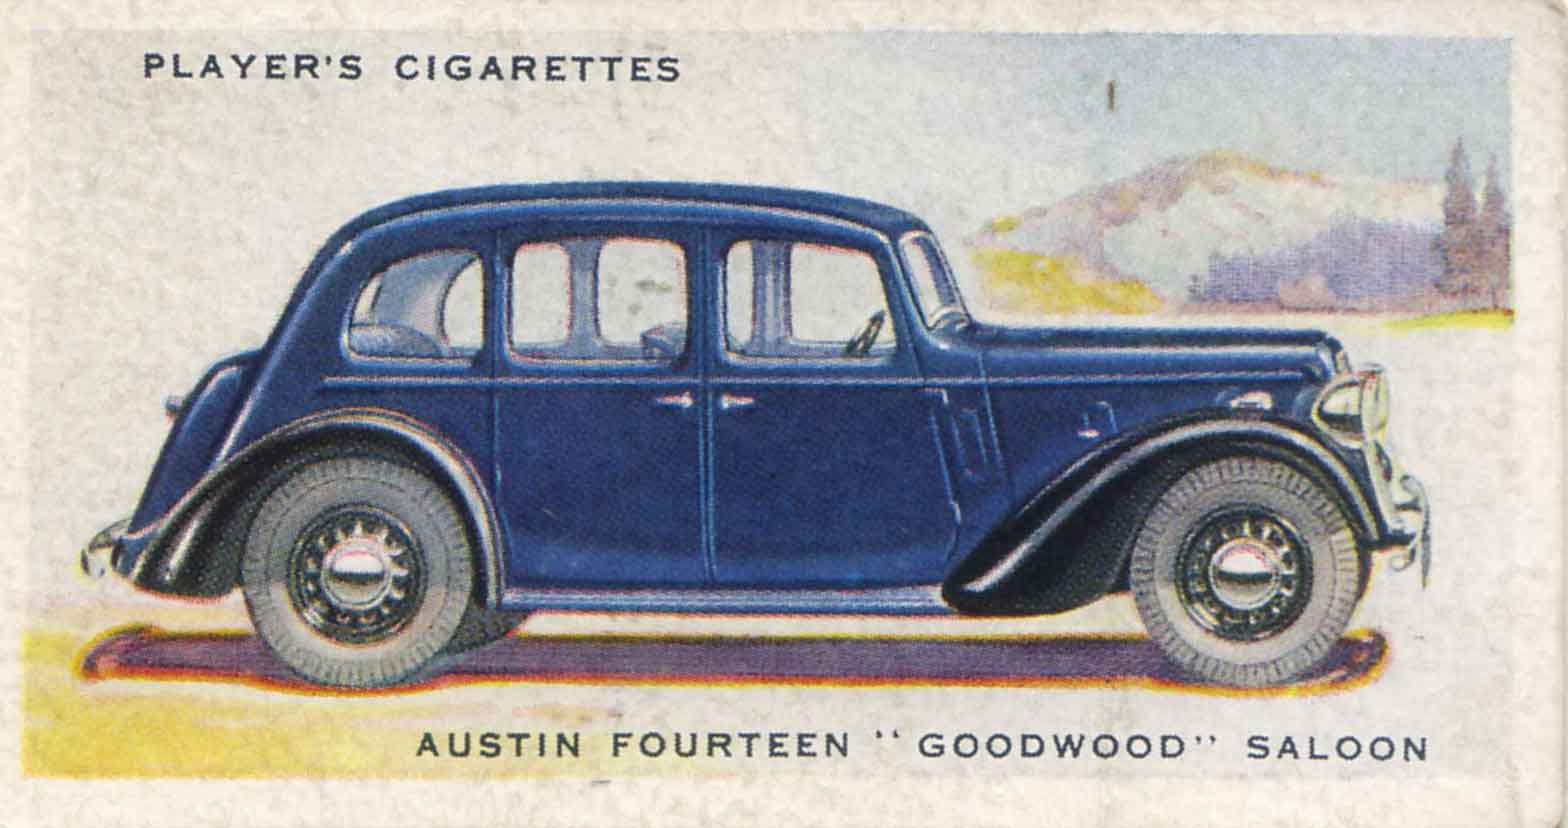 Austin Fourteen Goodwood Saloon. 1937 cigarette card.